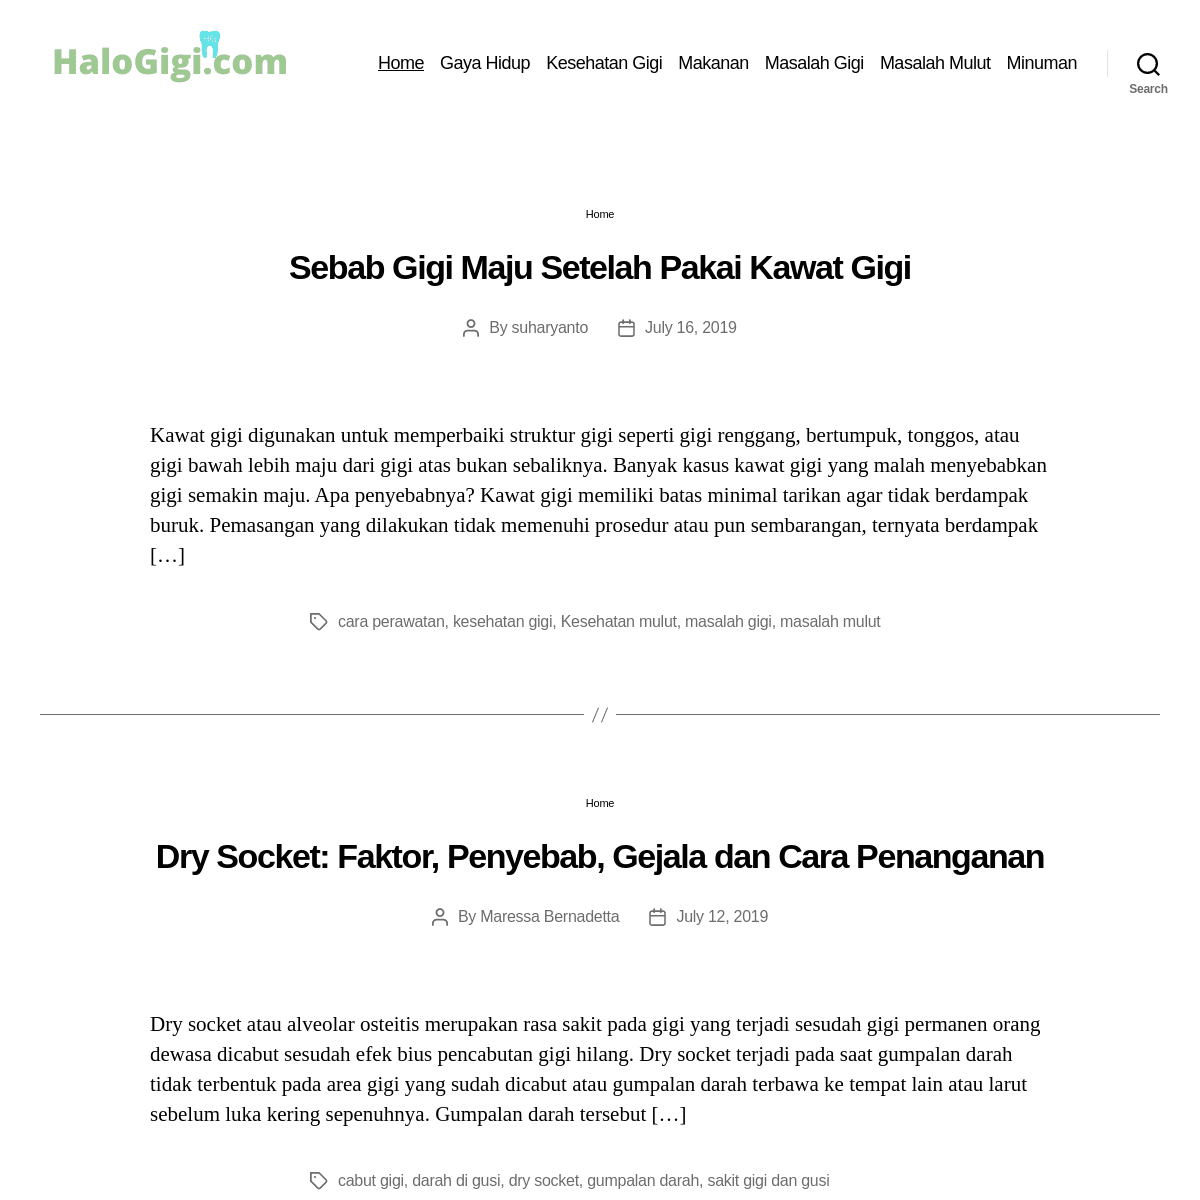 A complete backup of halogigi.com